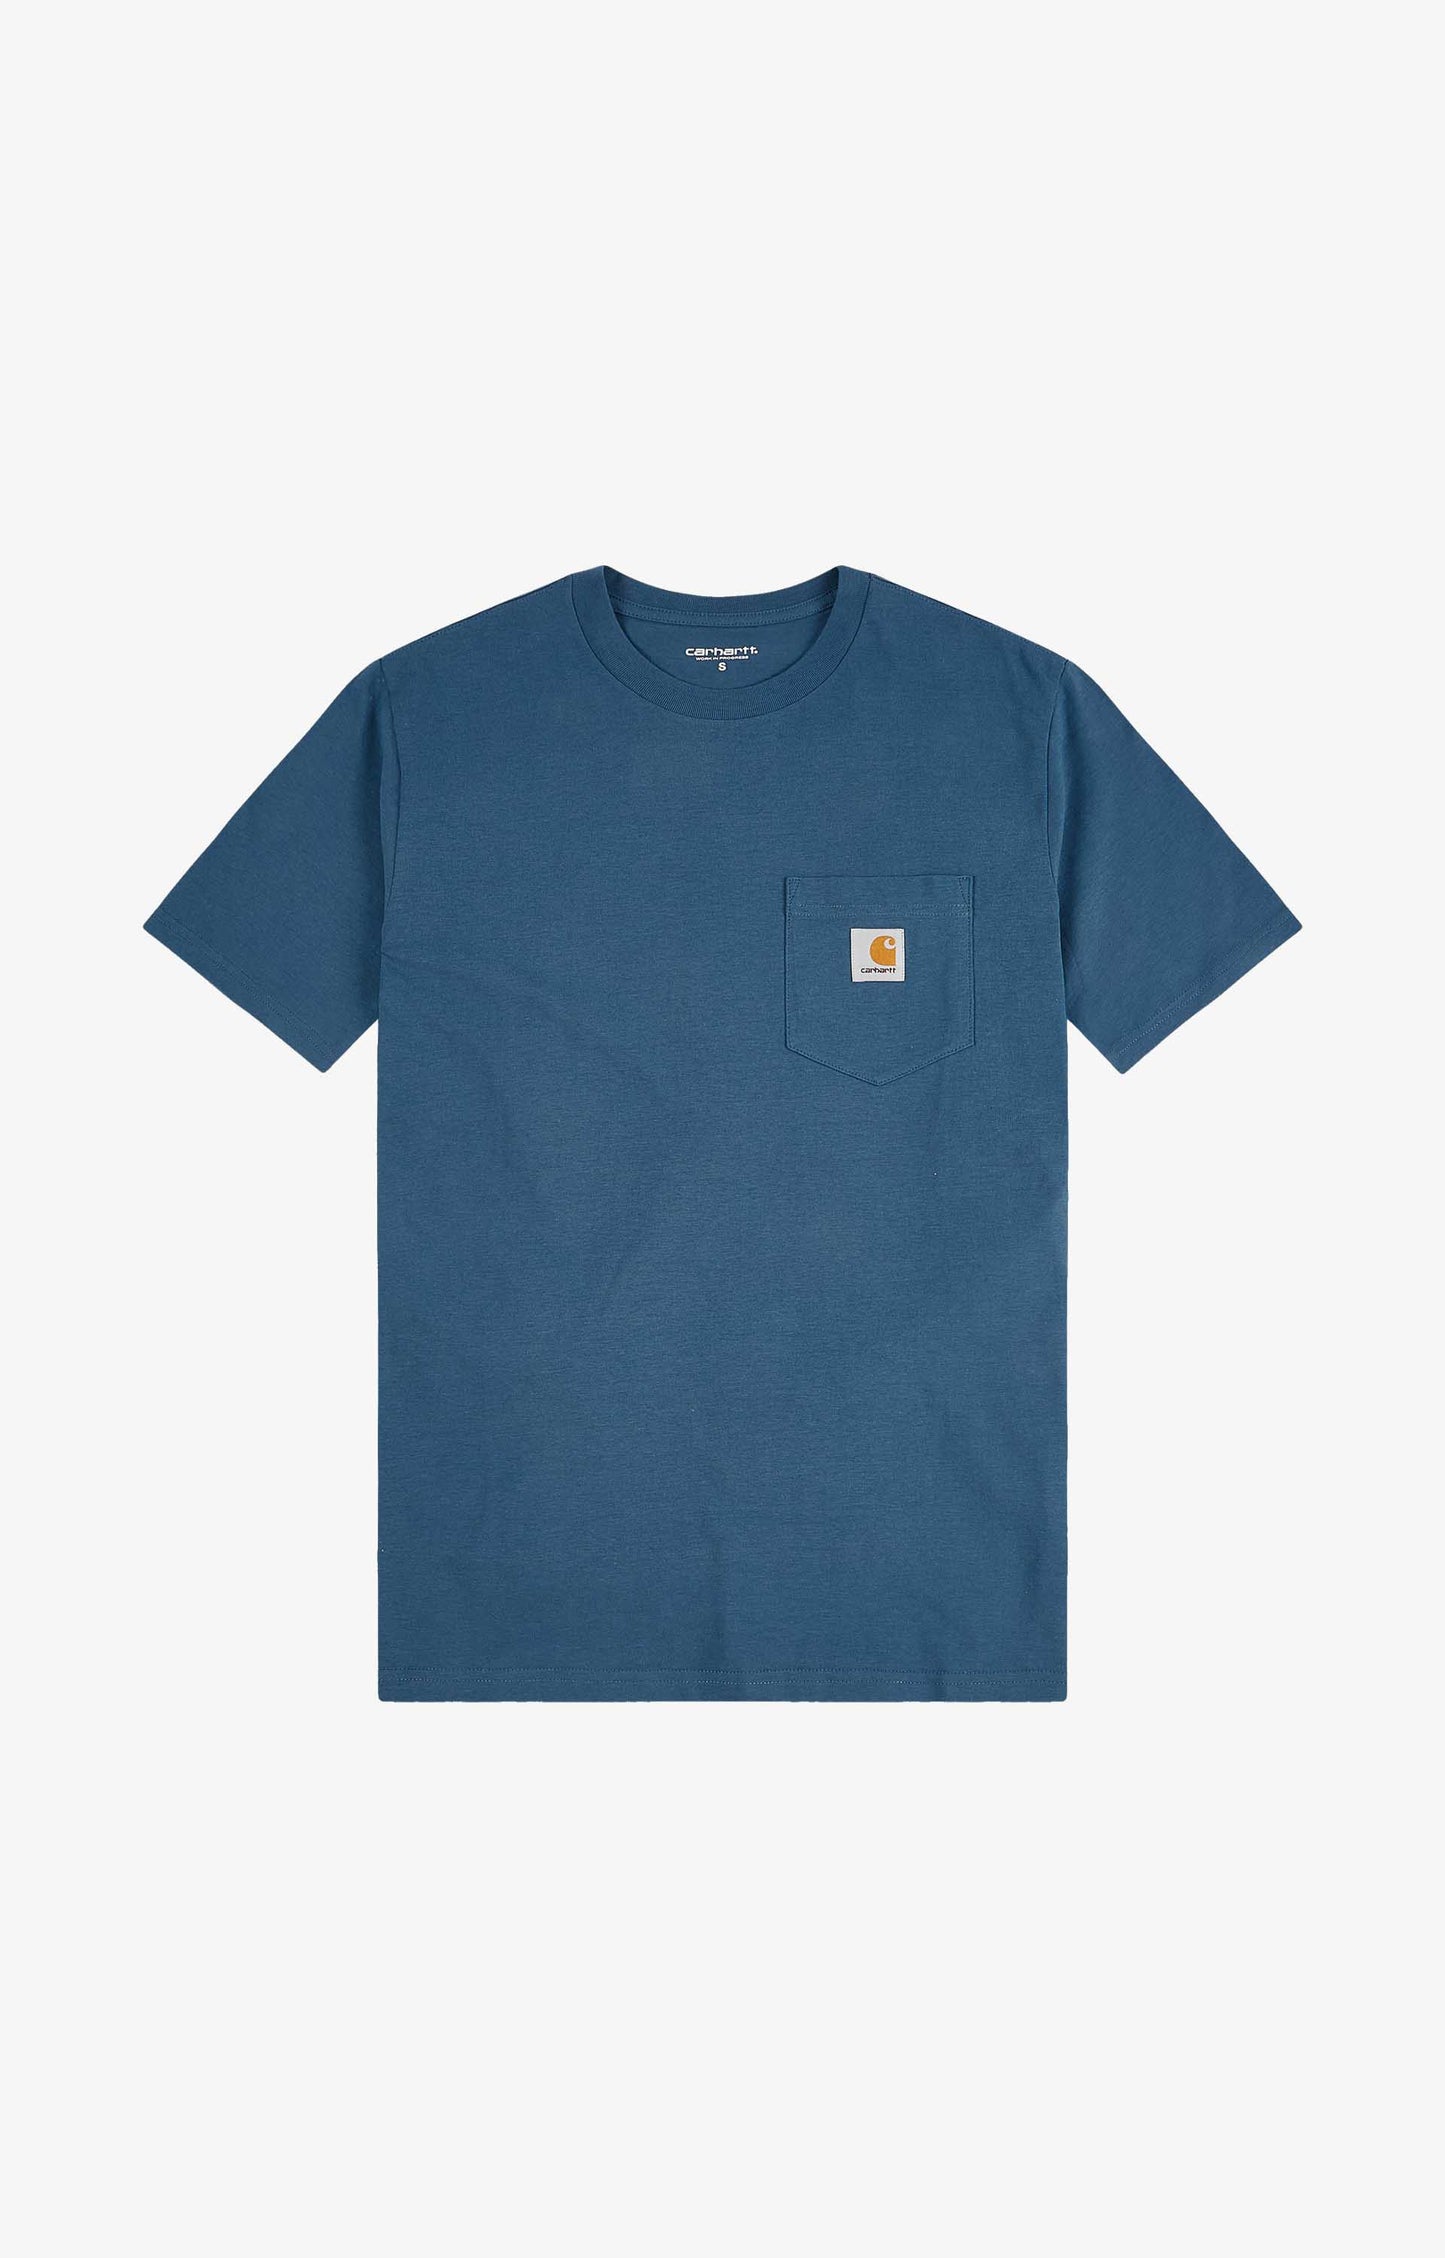 Carhartt WIP Pocket T-Shirt, Shore